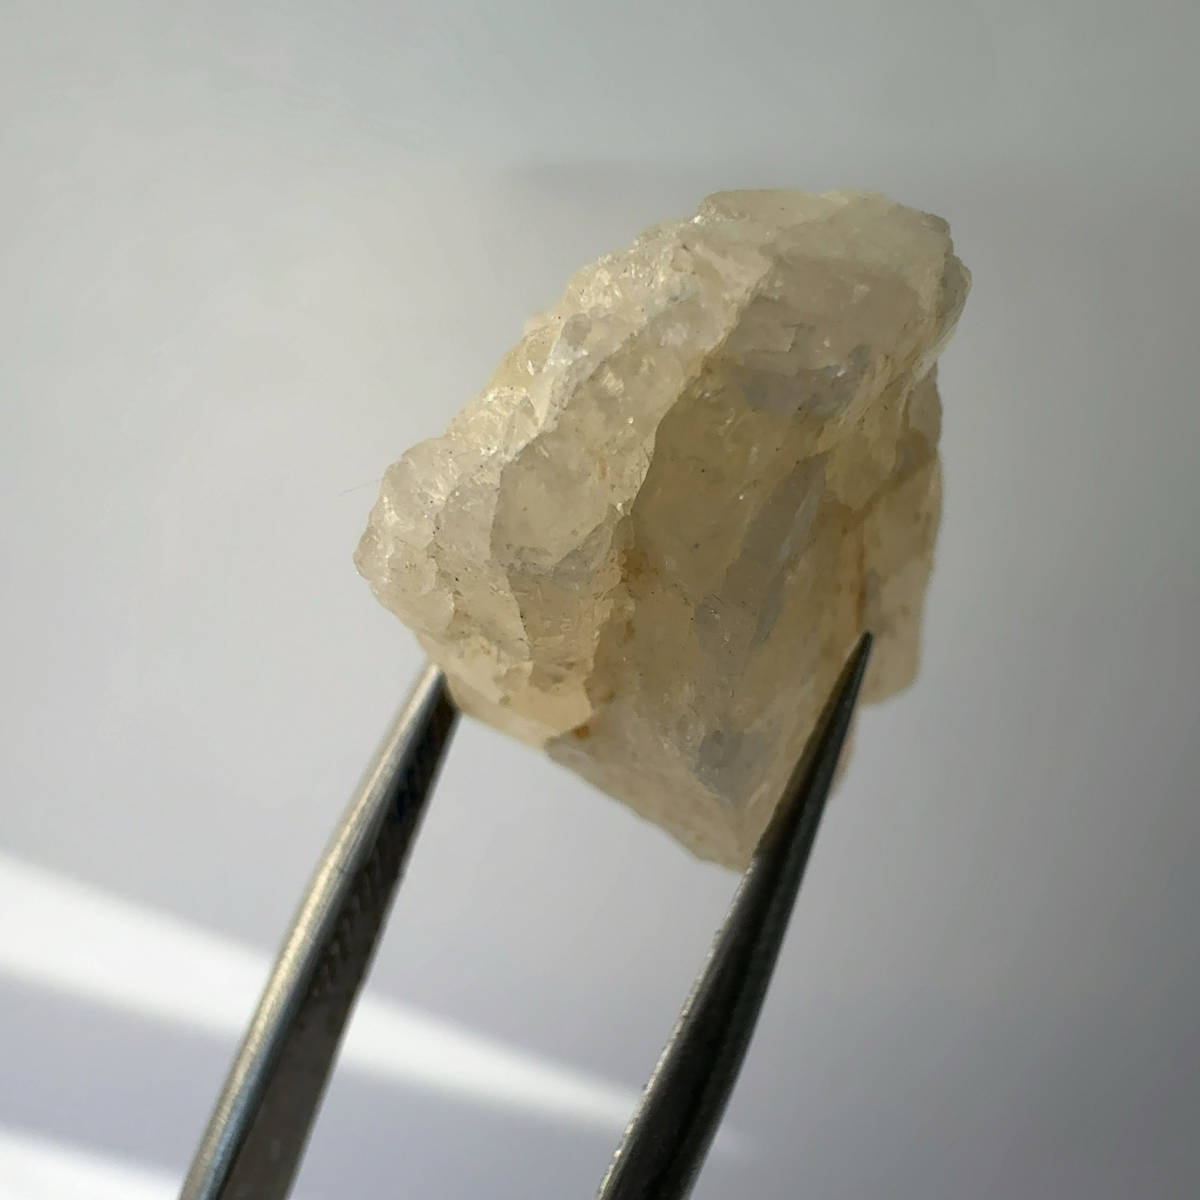 【E23771】 アンブリゴナイト アンブリゴ石 天然石 原石 鉱物 パワーストーン